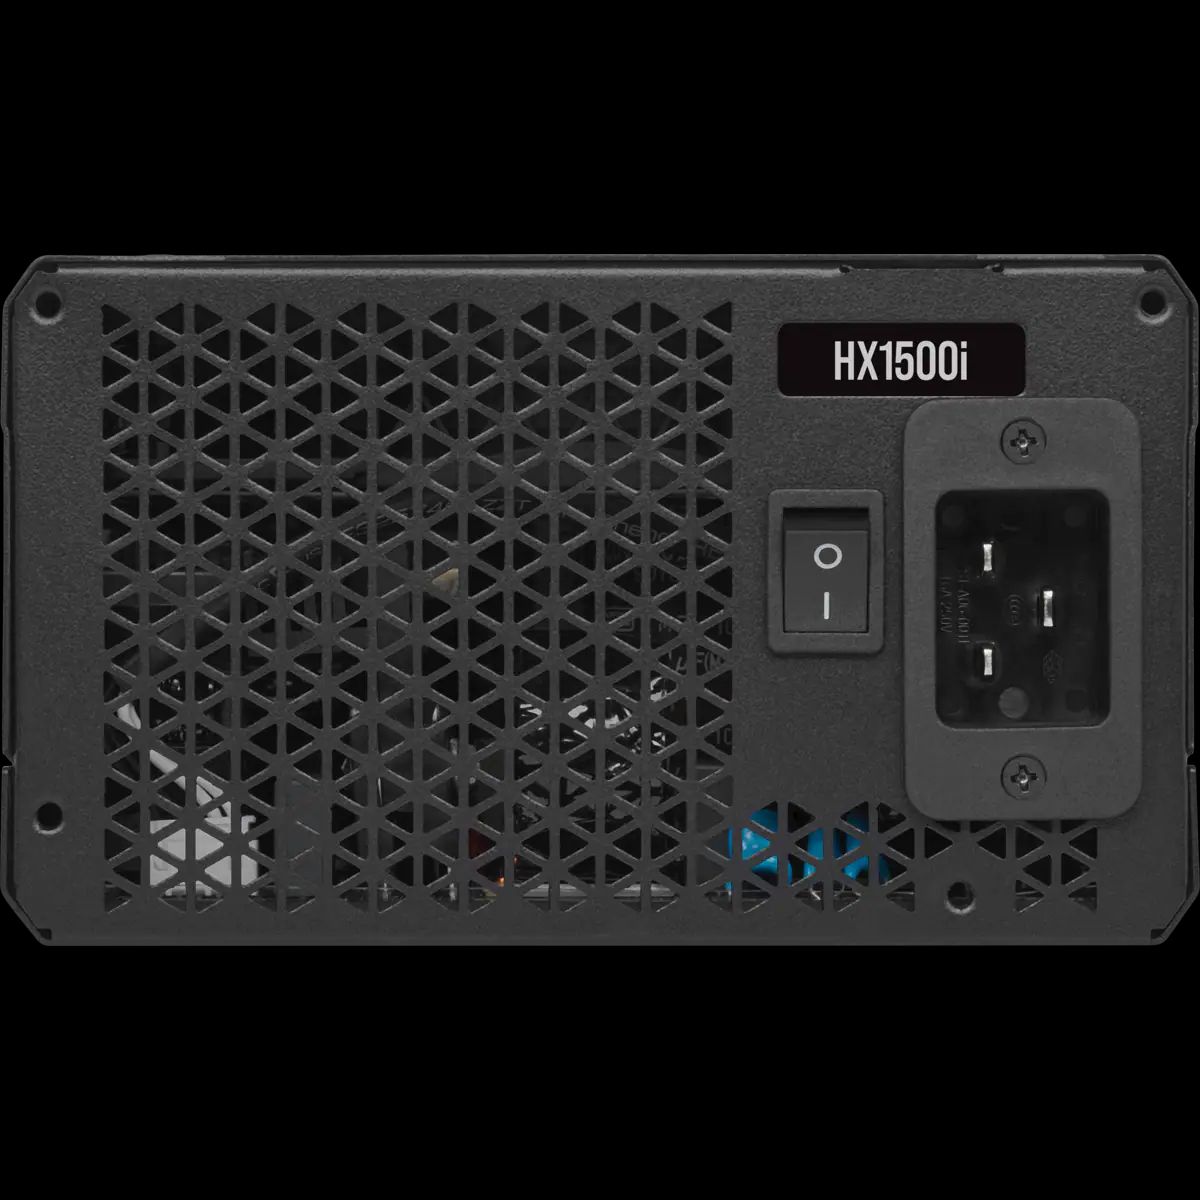 CP-9020215-EU - Fuente CORSAIR HX1500i Full Modular ATX 1500W 140mm SATA EPS 80 Plus Platinum Negra (CP-9020215-EU)